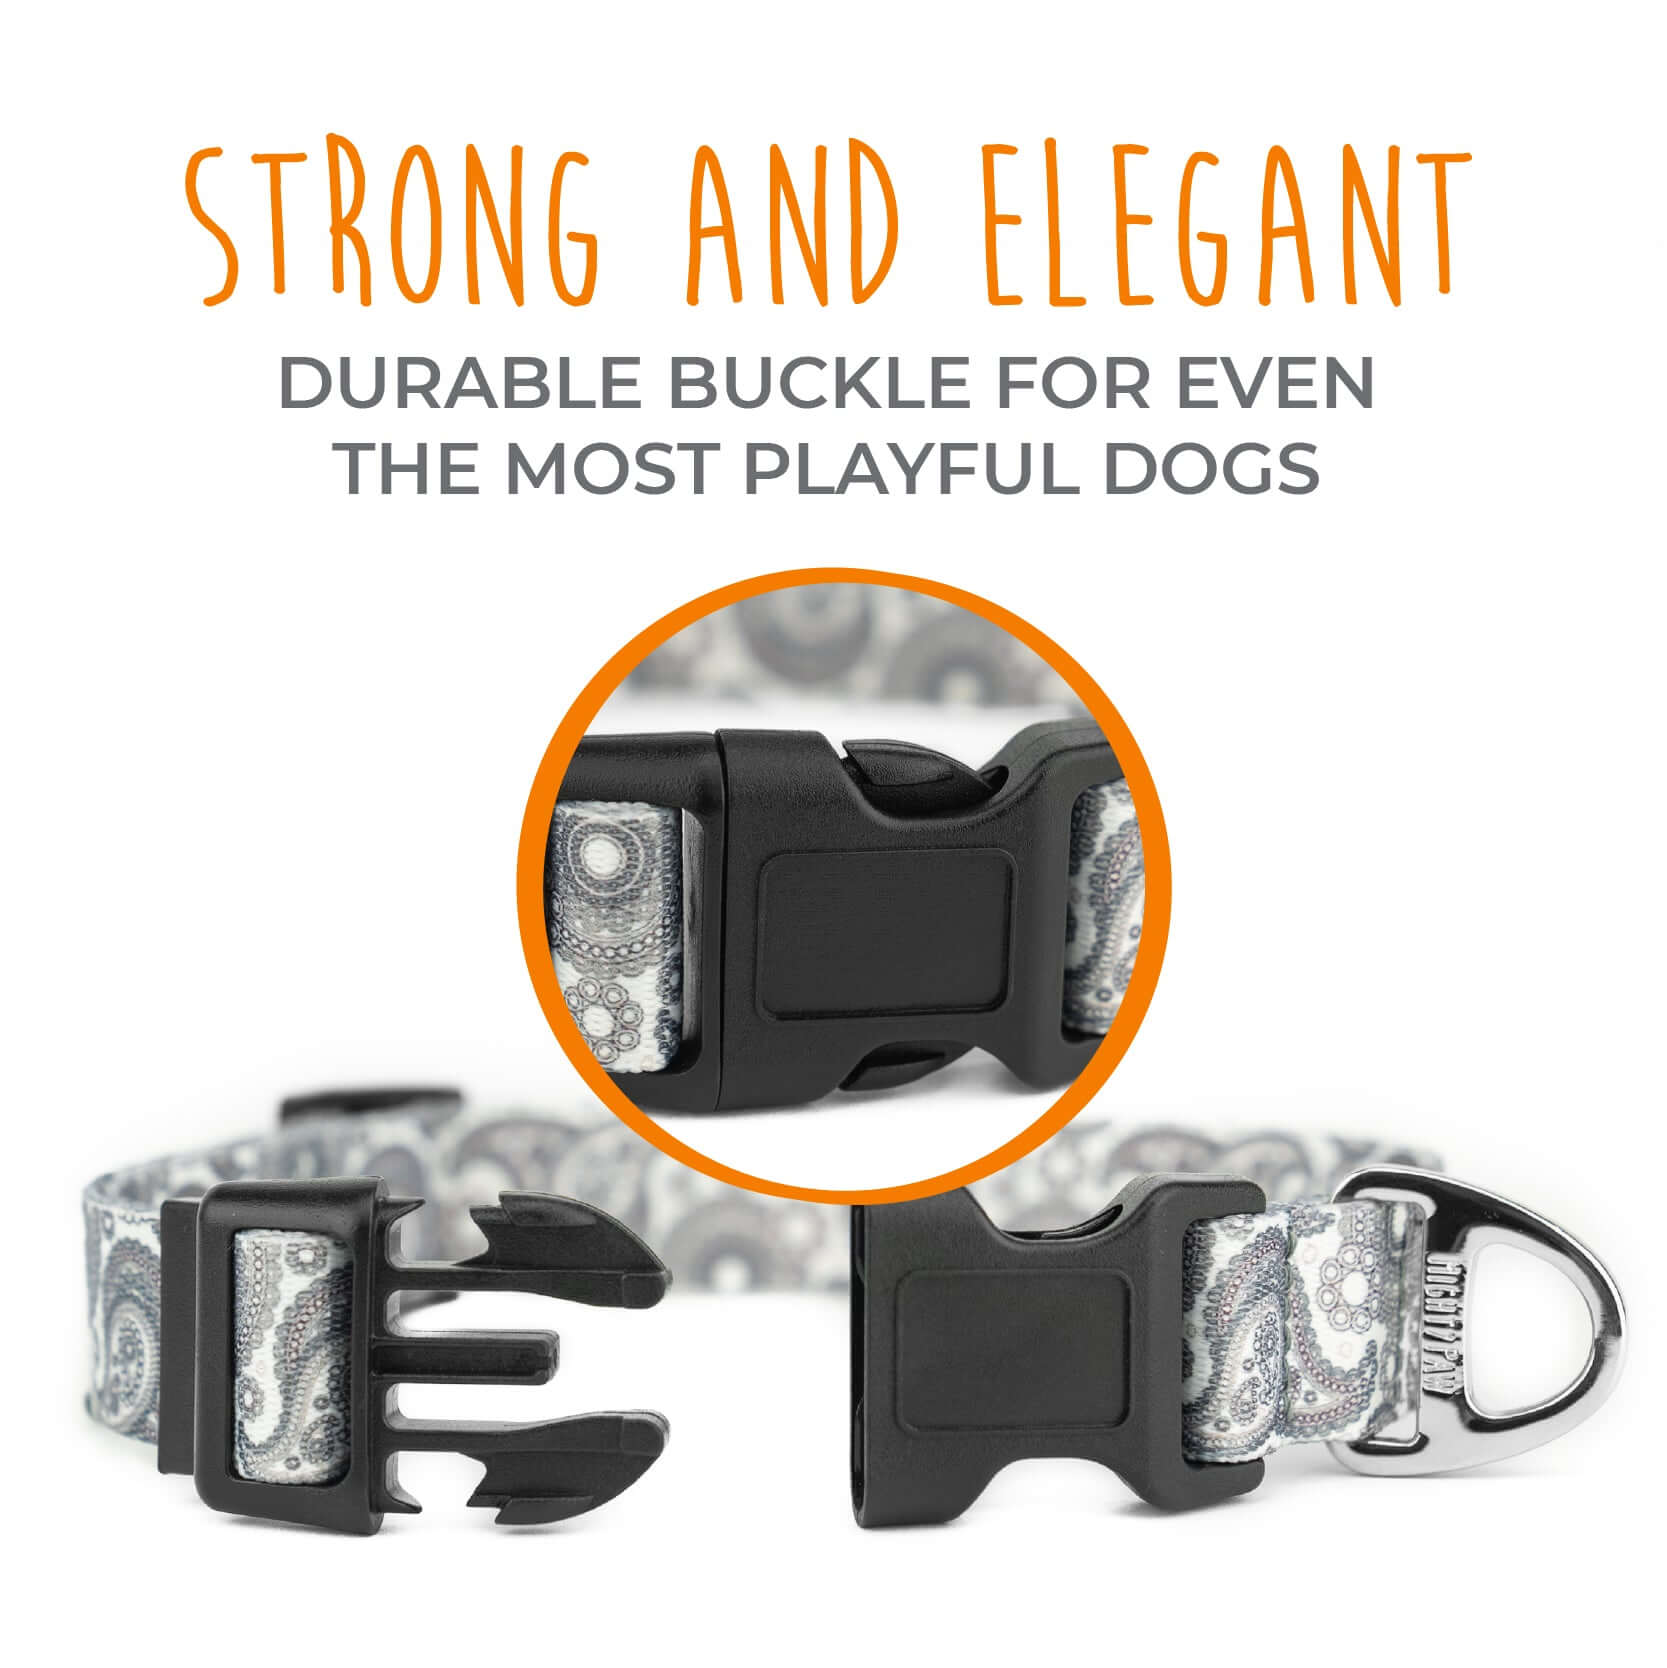 Grey Designer Paisley Dog Collar with Adjustable Tri-Glide Buckle